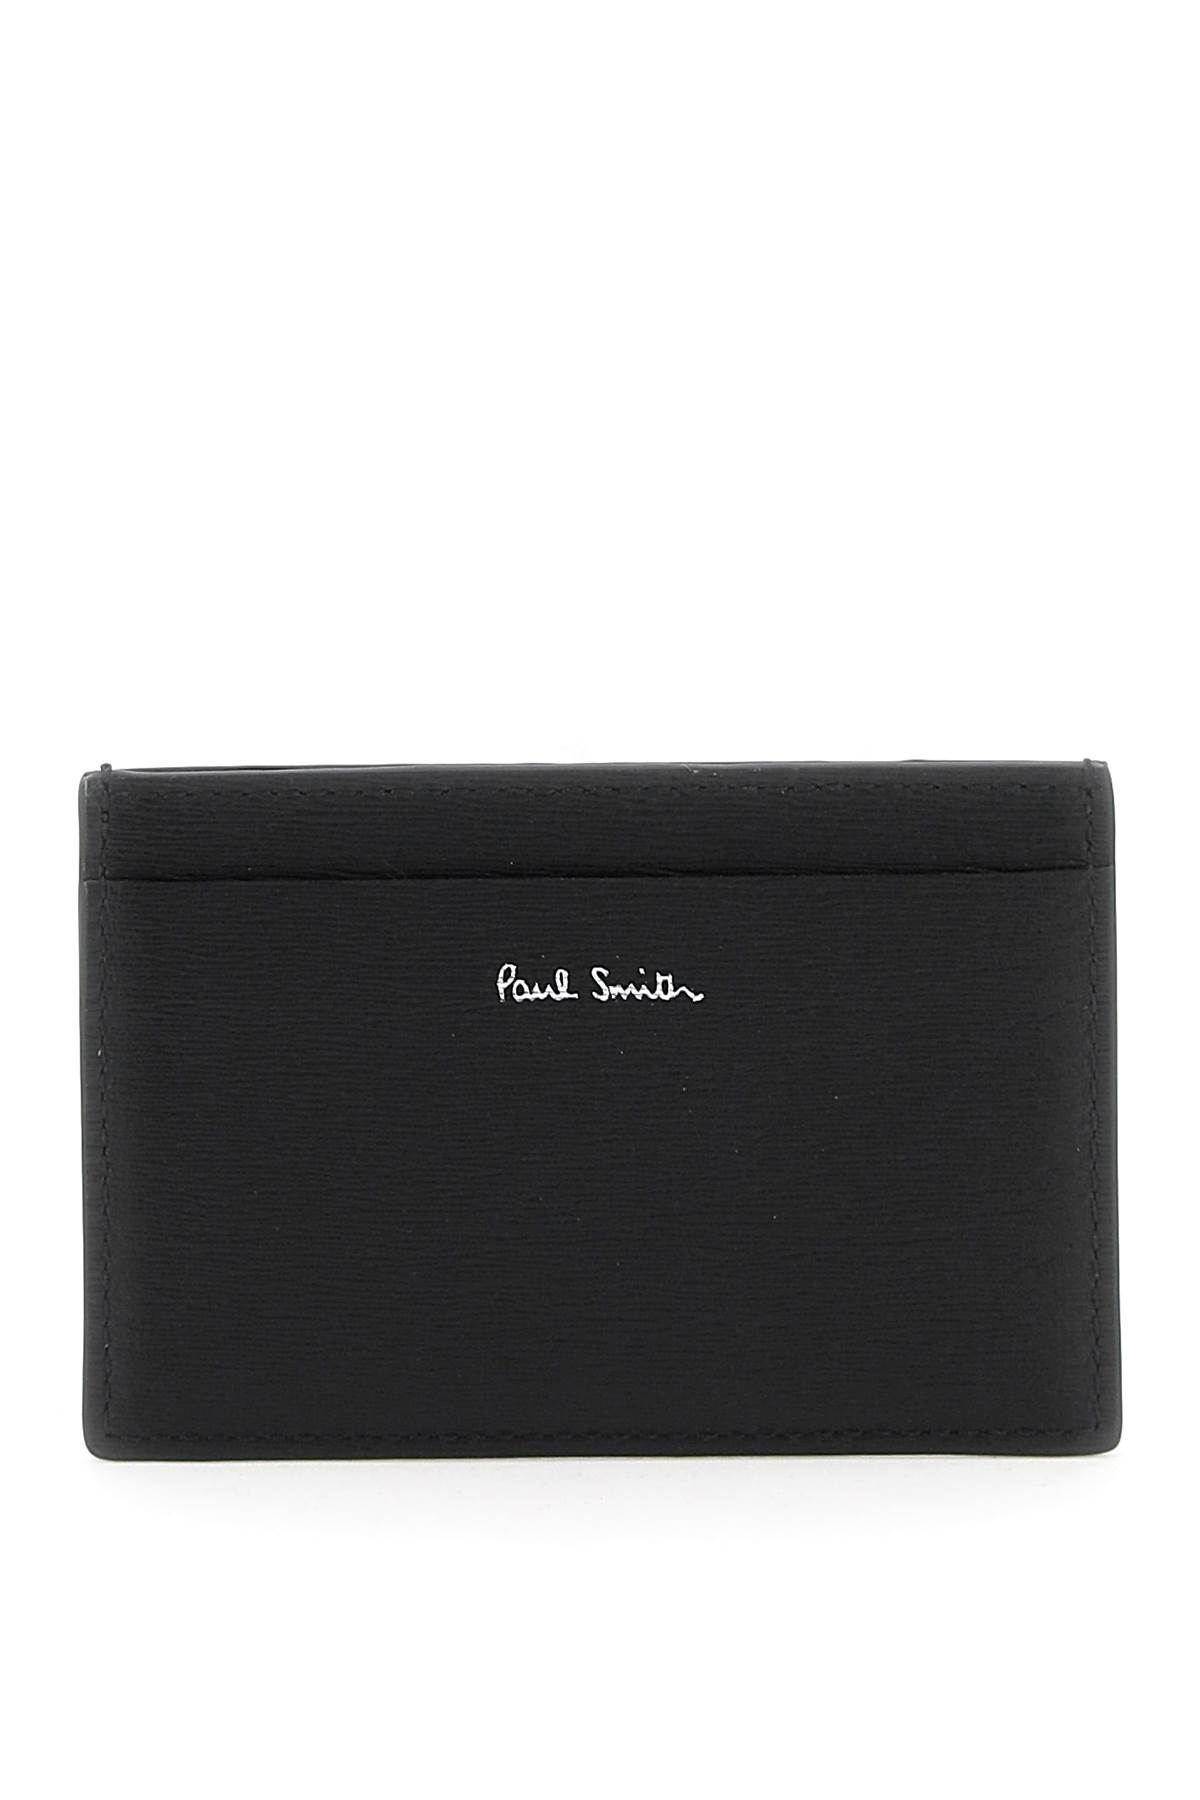 Paul Smith Leather Cardholder In Black (black)